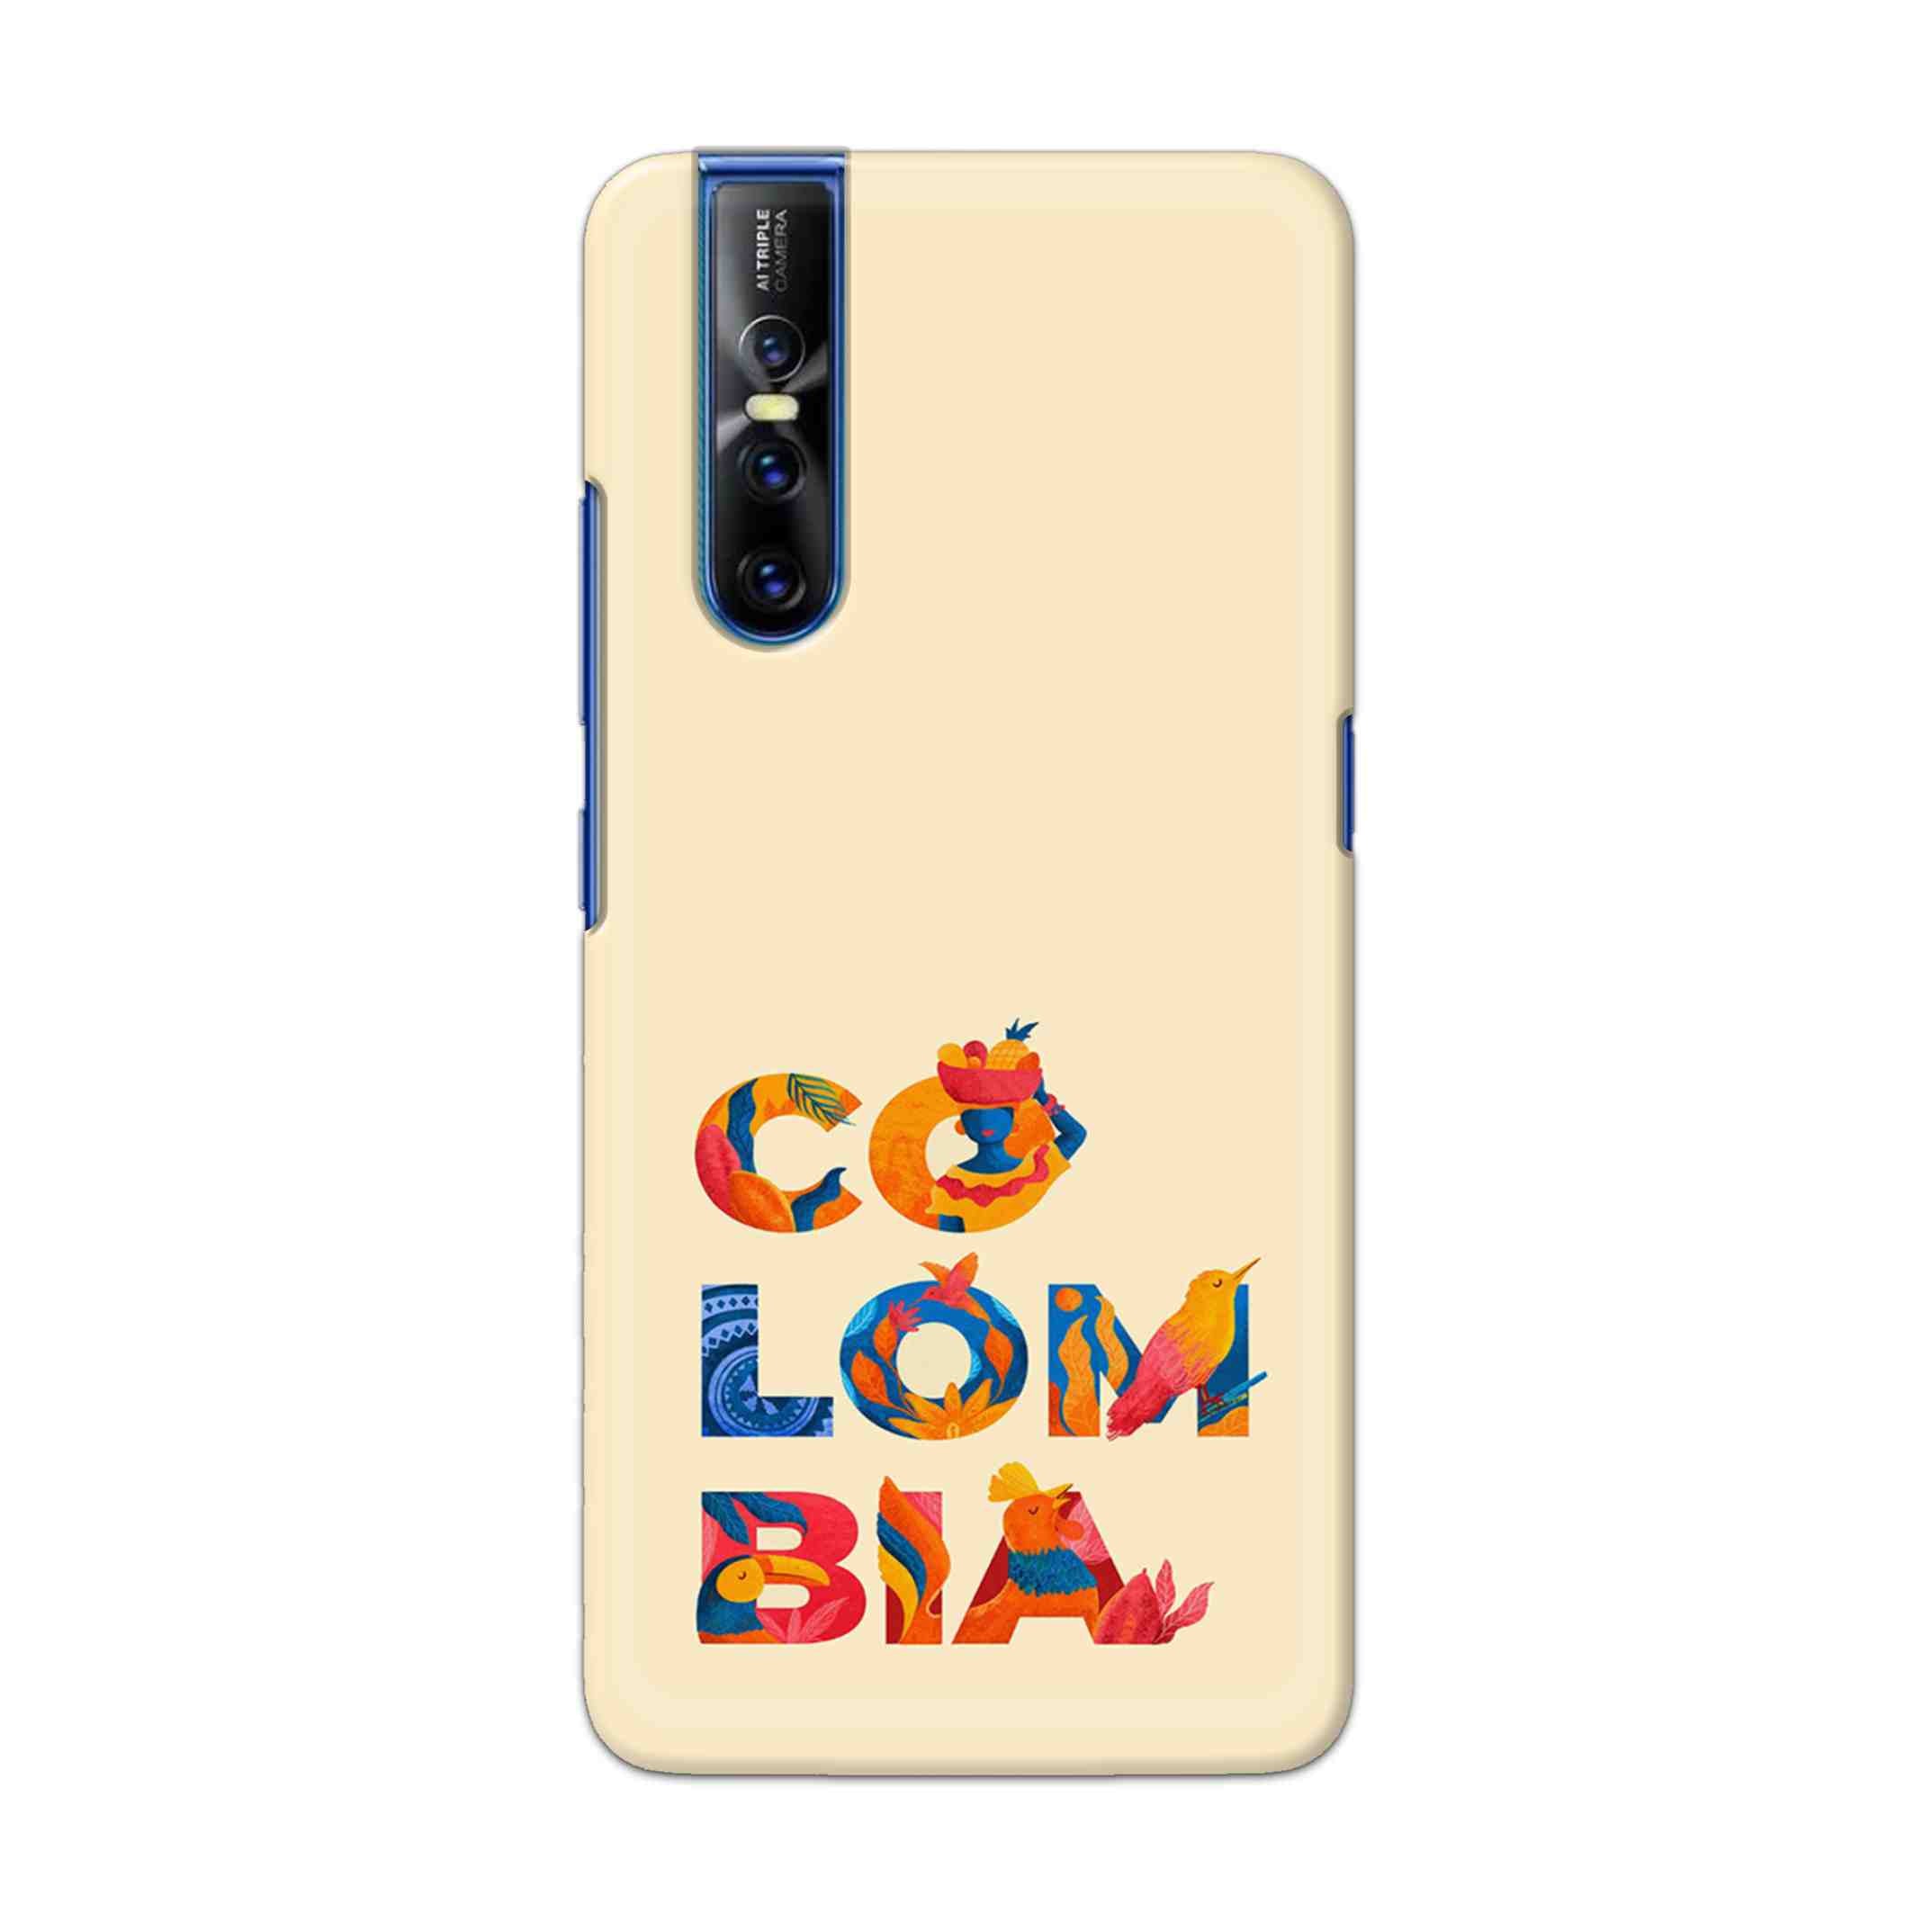 Buy Colombia Hard Back Mobile Phone Case Cover For Vivo V15 Pro Online